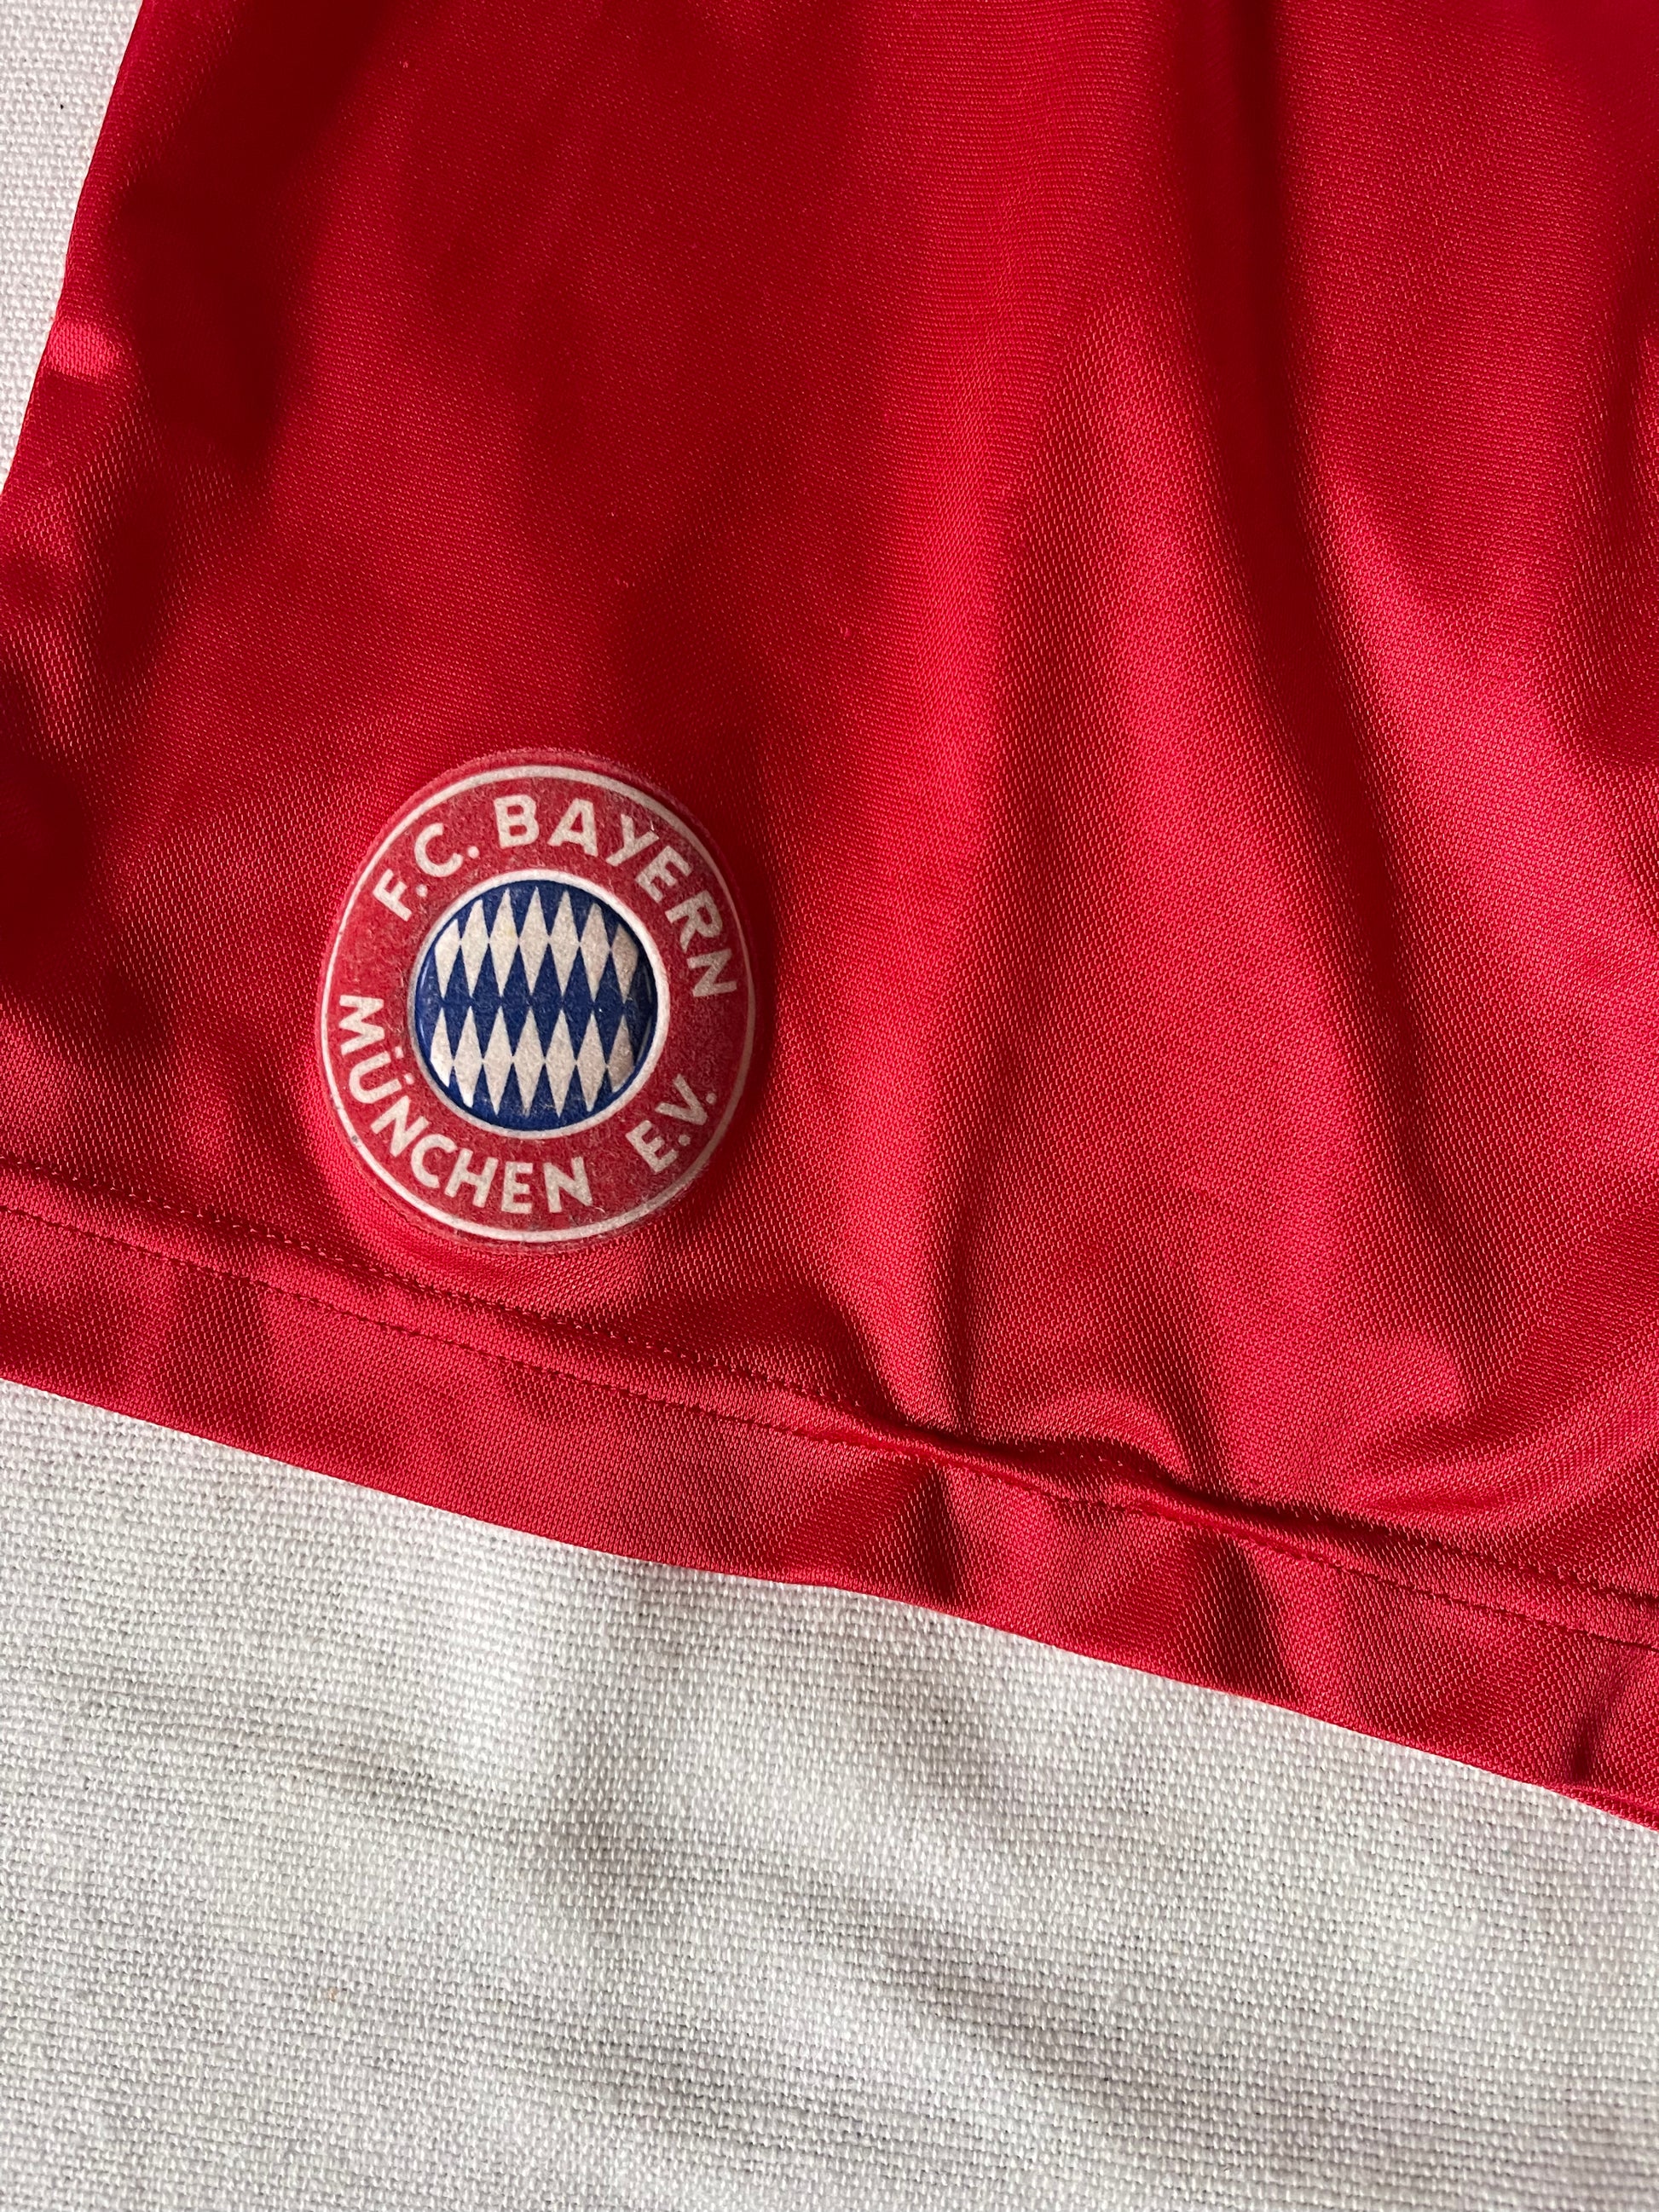 Vintage Adidas Equipment Bayern Munchen Munich Football Shorts Home 1993-1995 Red Size M